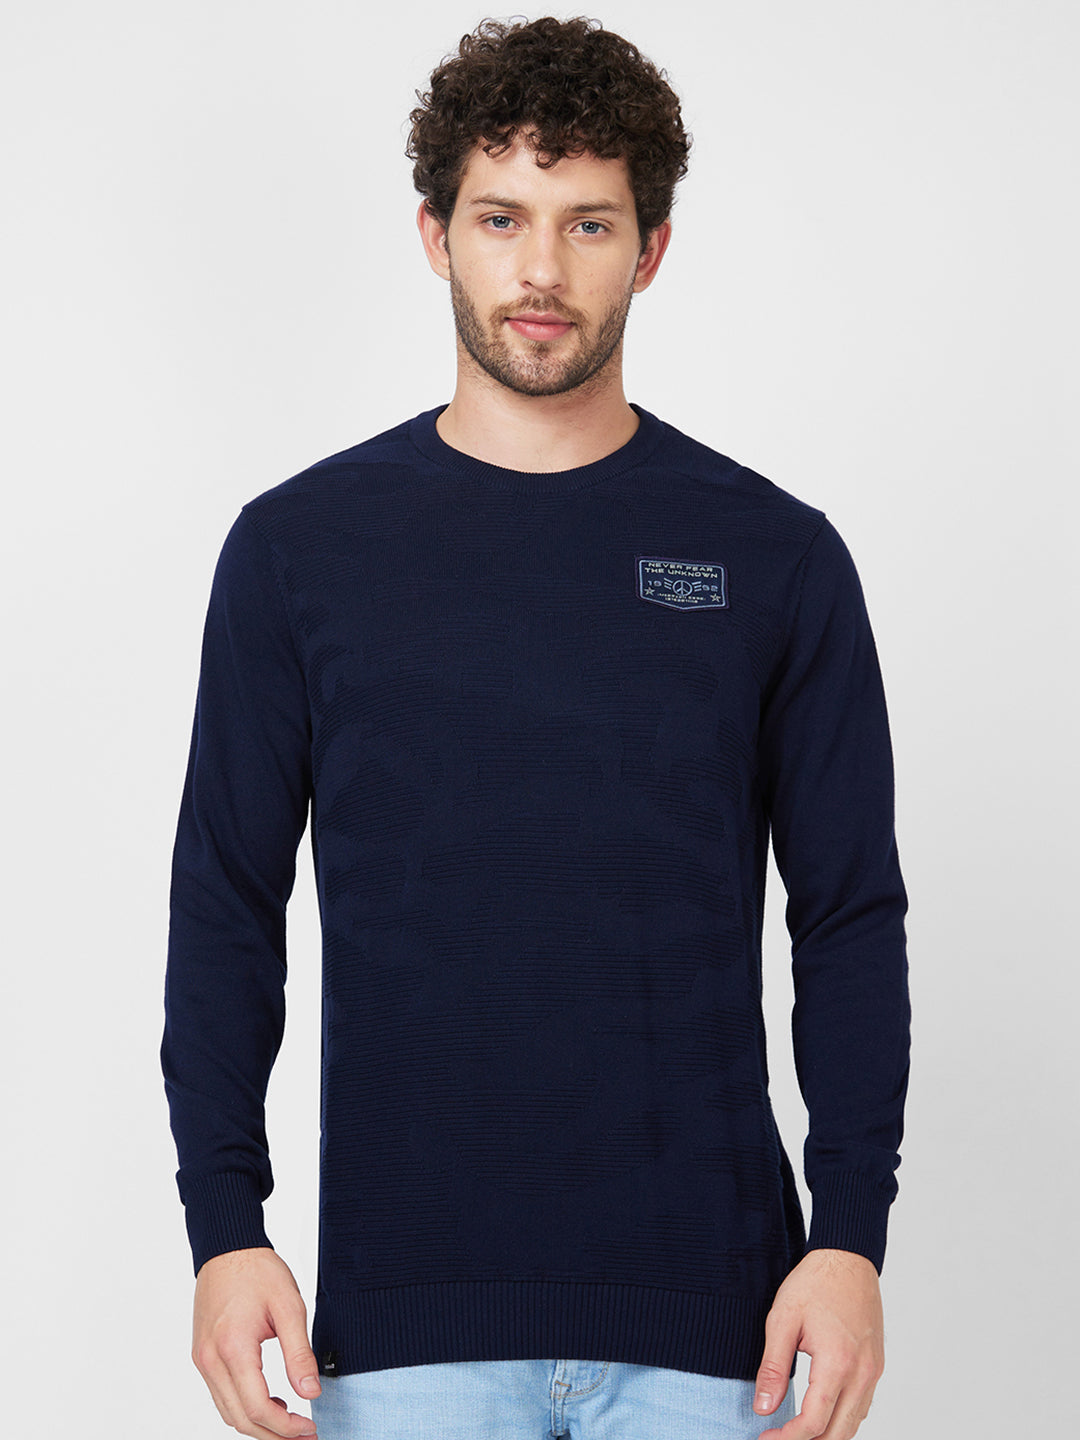 Spykar Full Sleeve Round Neck Blue Cotton Sweater For Men